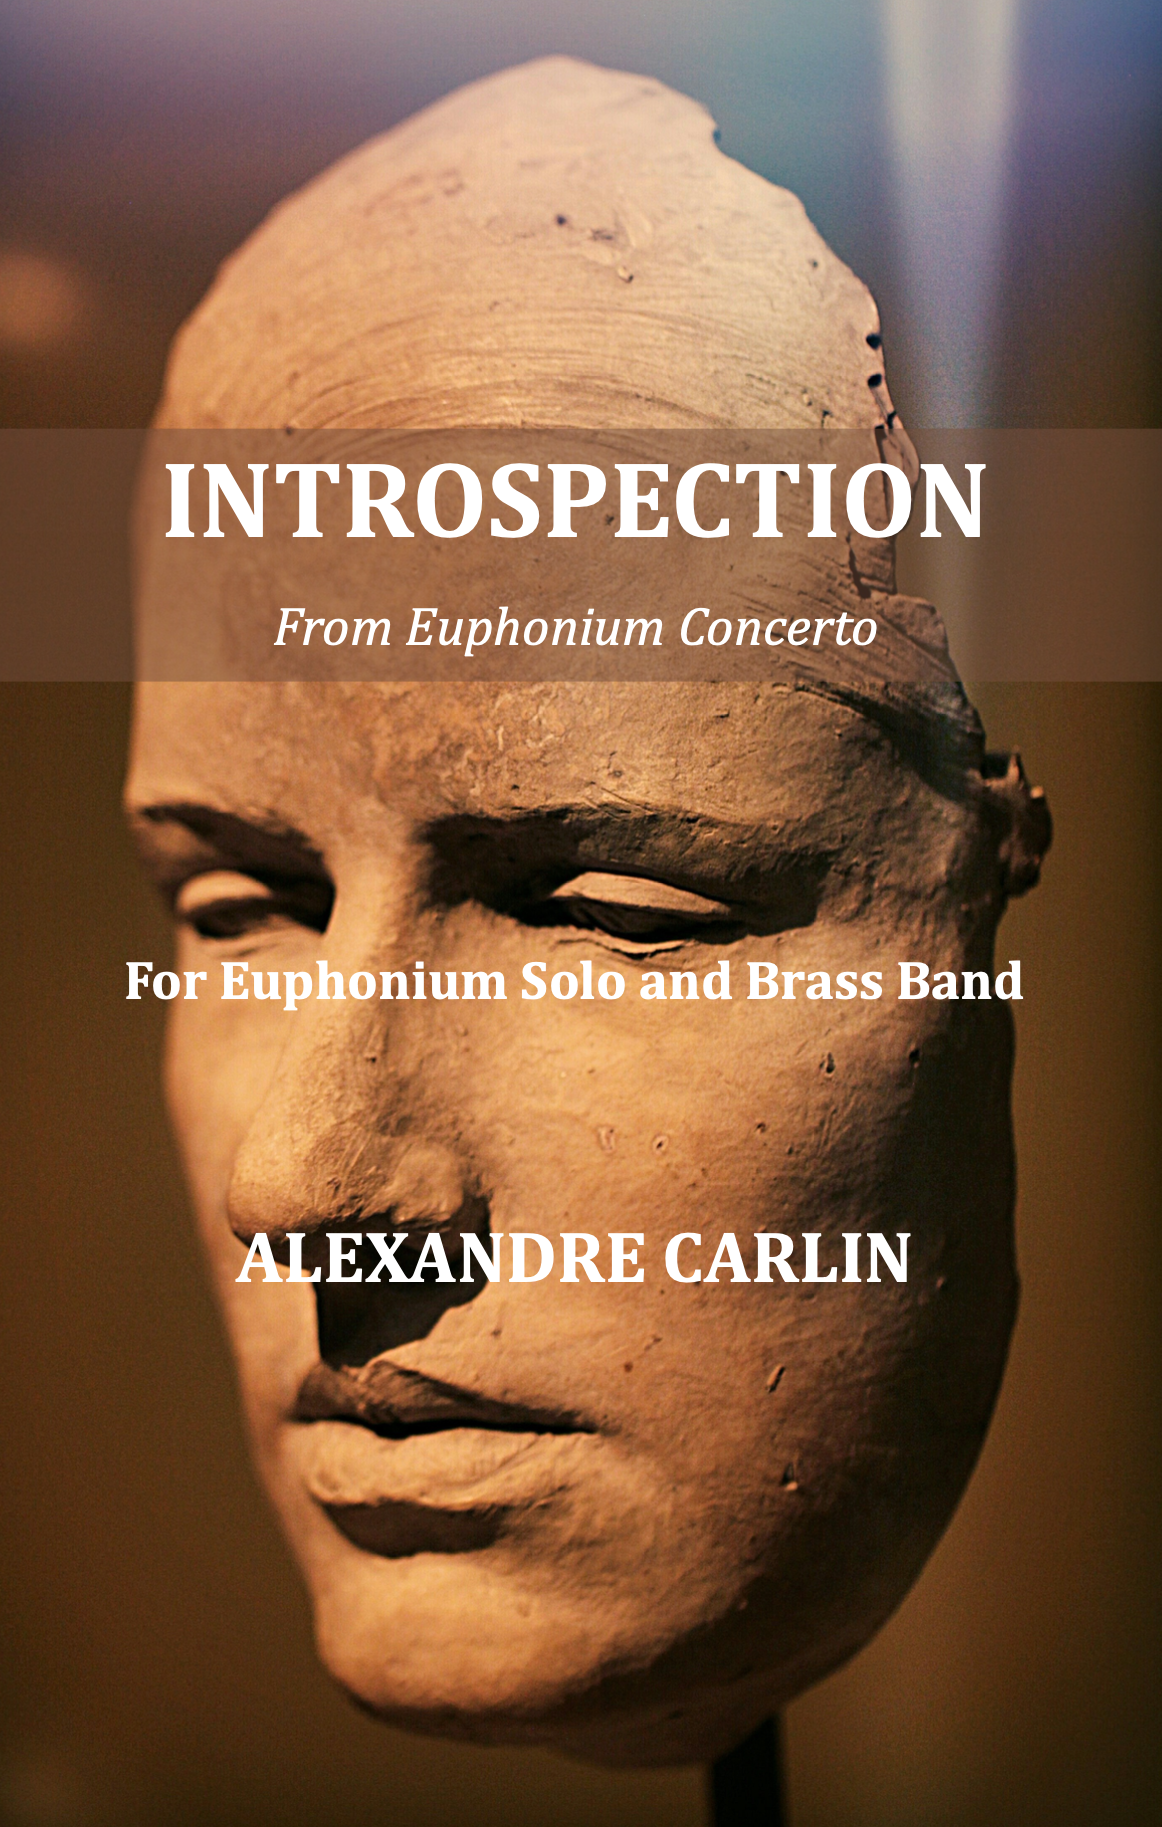 Introspection (Brass Band Version) by Alexadre Carlin